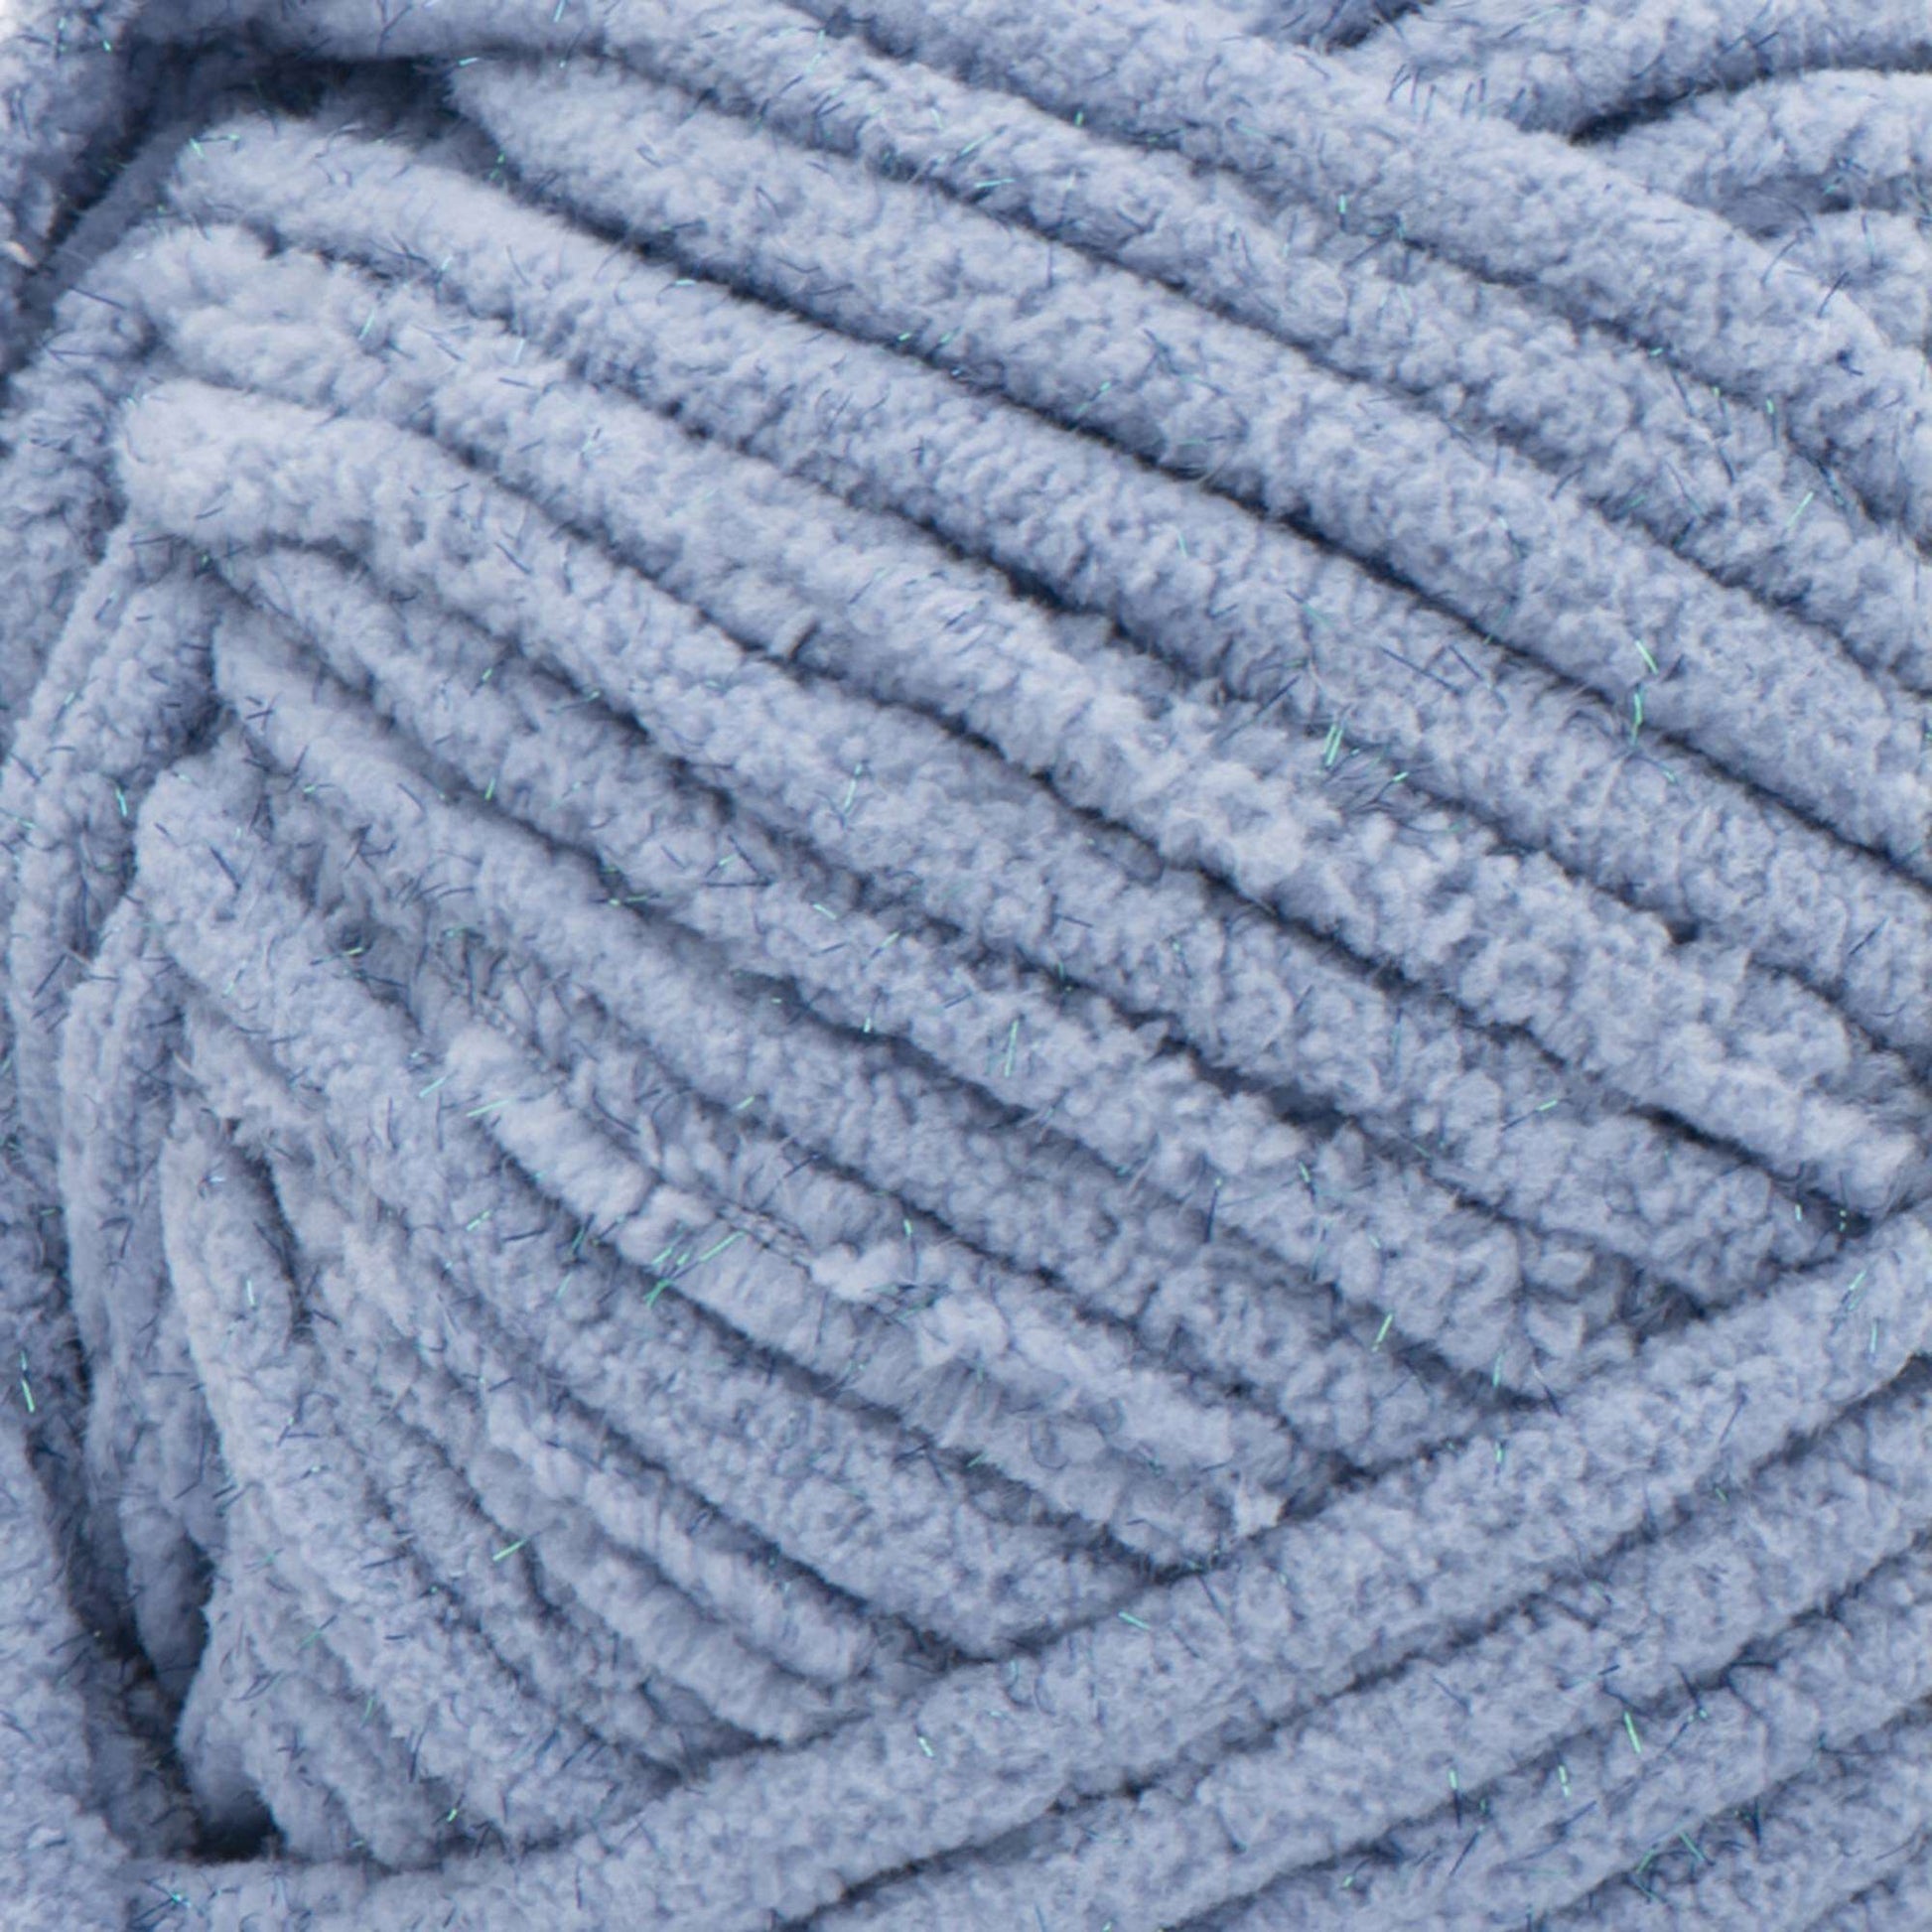 Bernat Blanket Yarn Sparkle 300g - HandcraftdLuv Inc